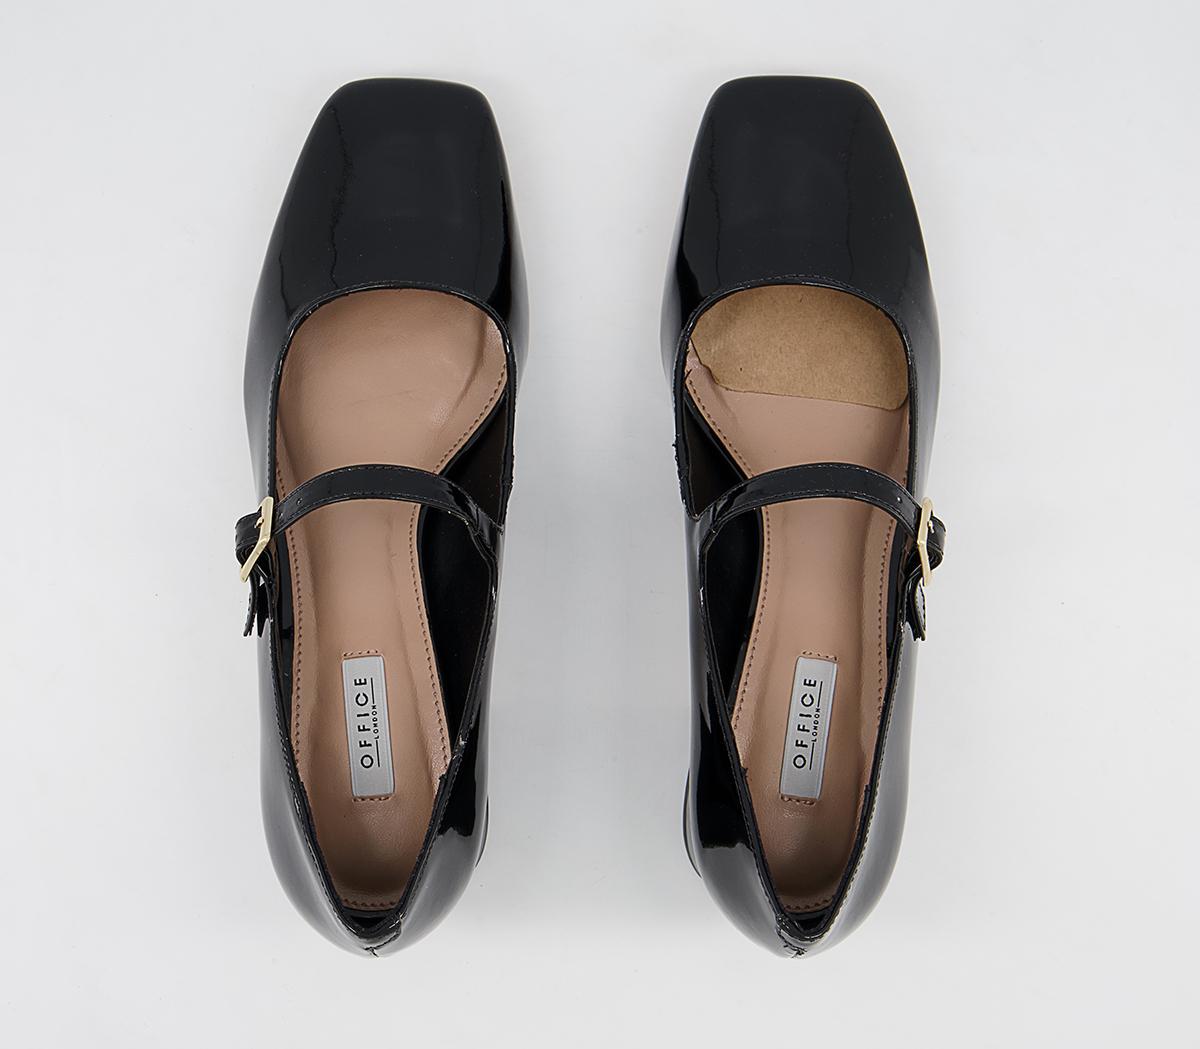 OFFICE Maleah Low Block Mary Janes Heels Black Patent Leather - Mid Heels